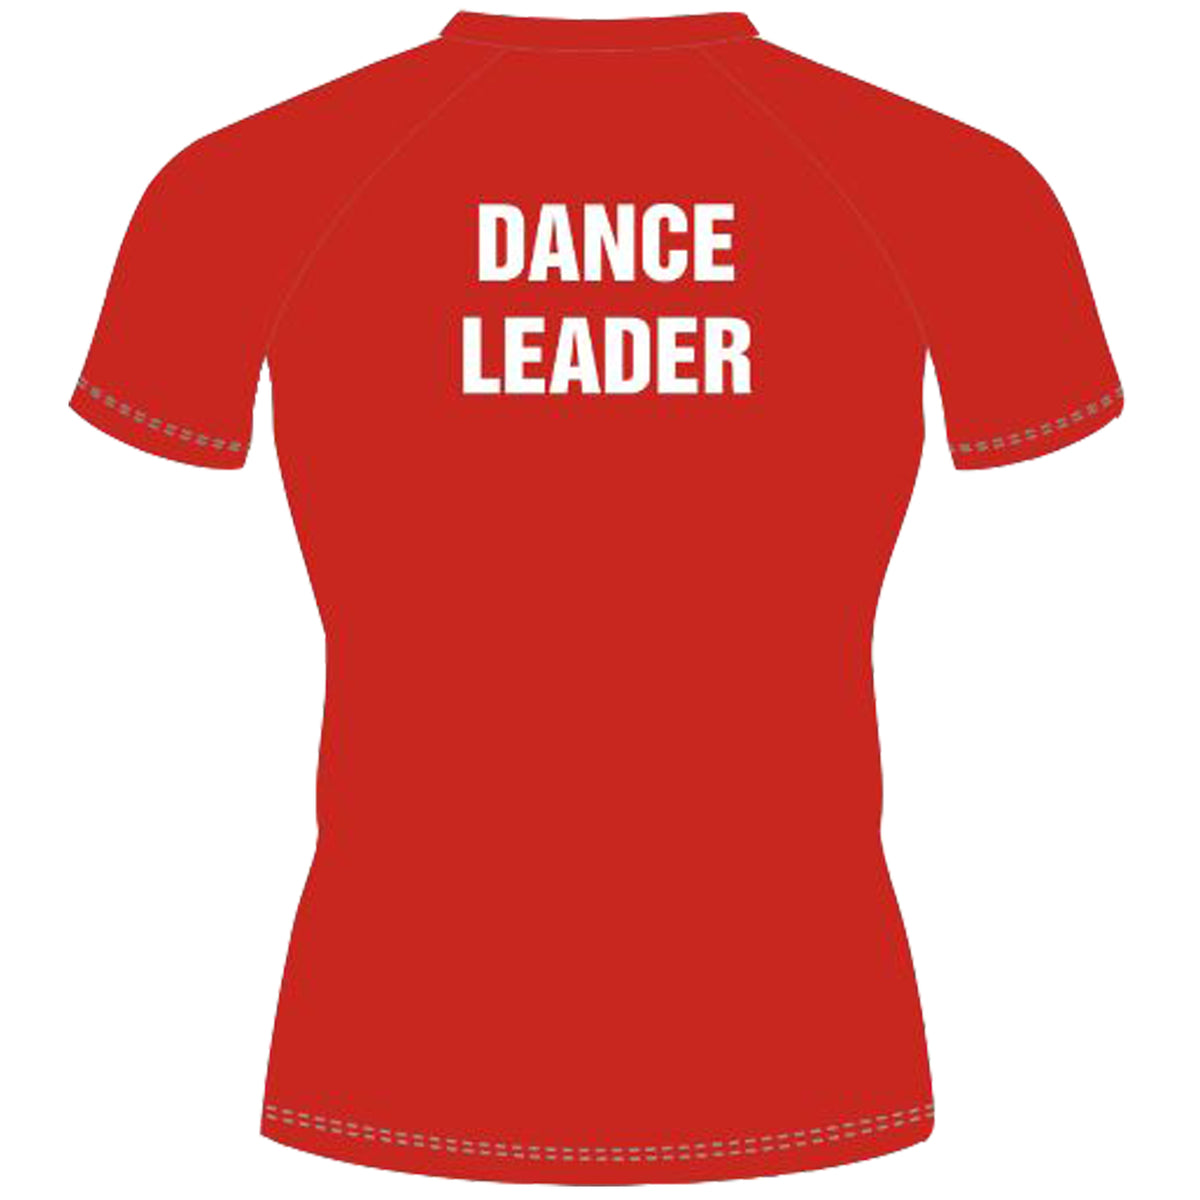 Sir William Borlase Grammar School Dance leader Tshirt